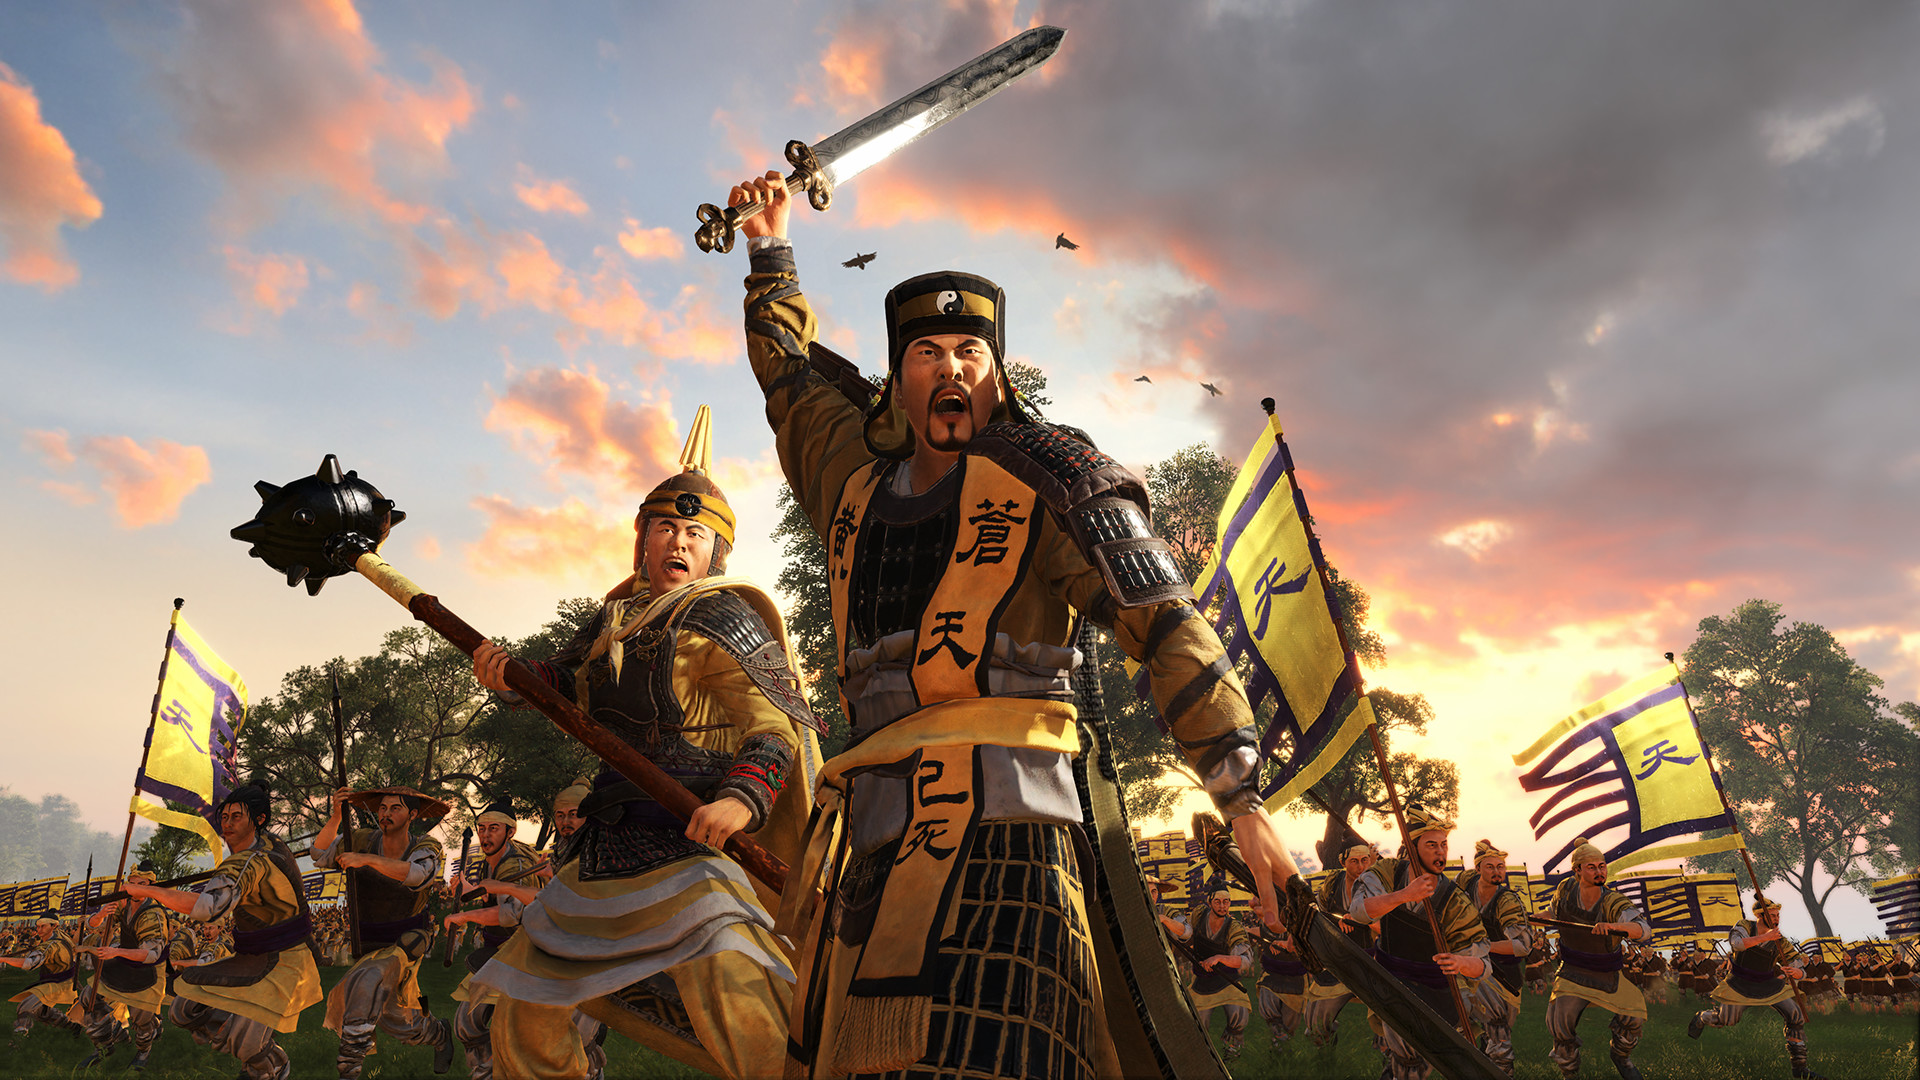 Total War: THREE KINGDOMS - Yellow Turban Rebellion Download For Mac